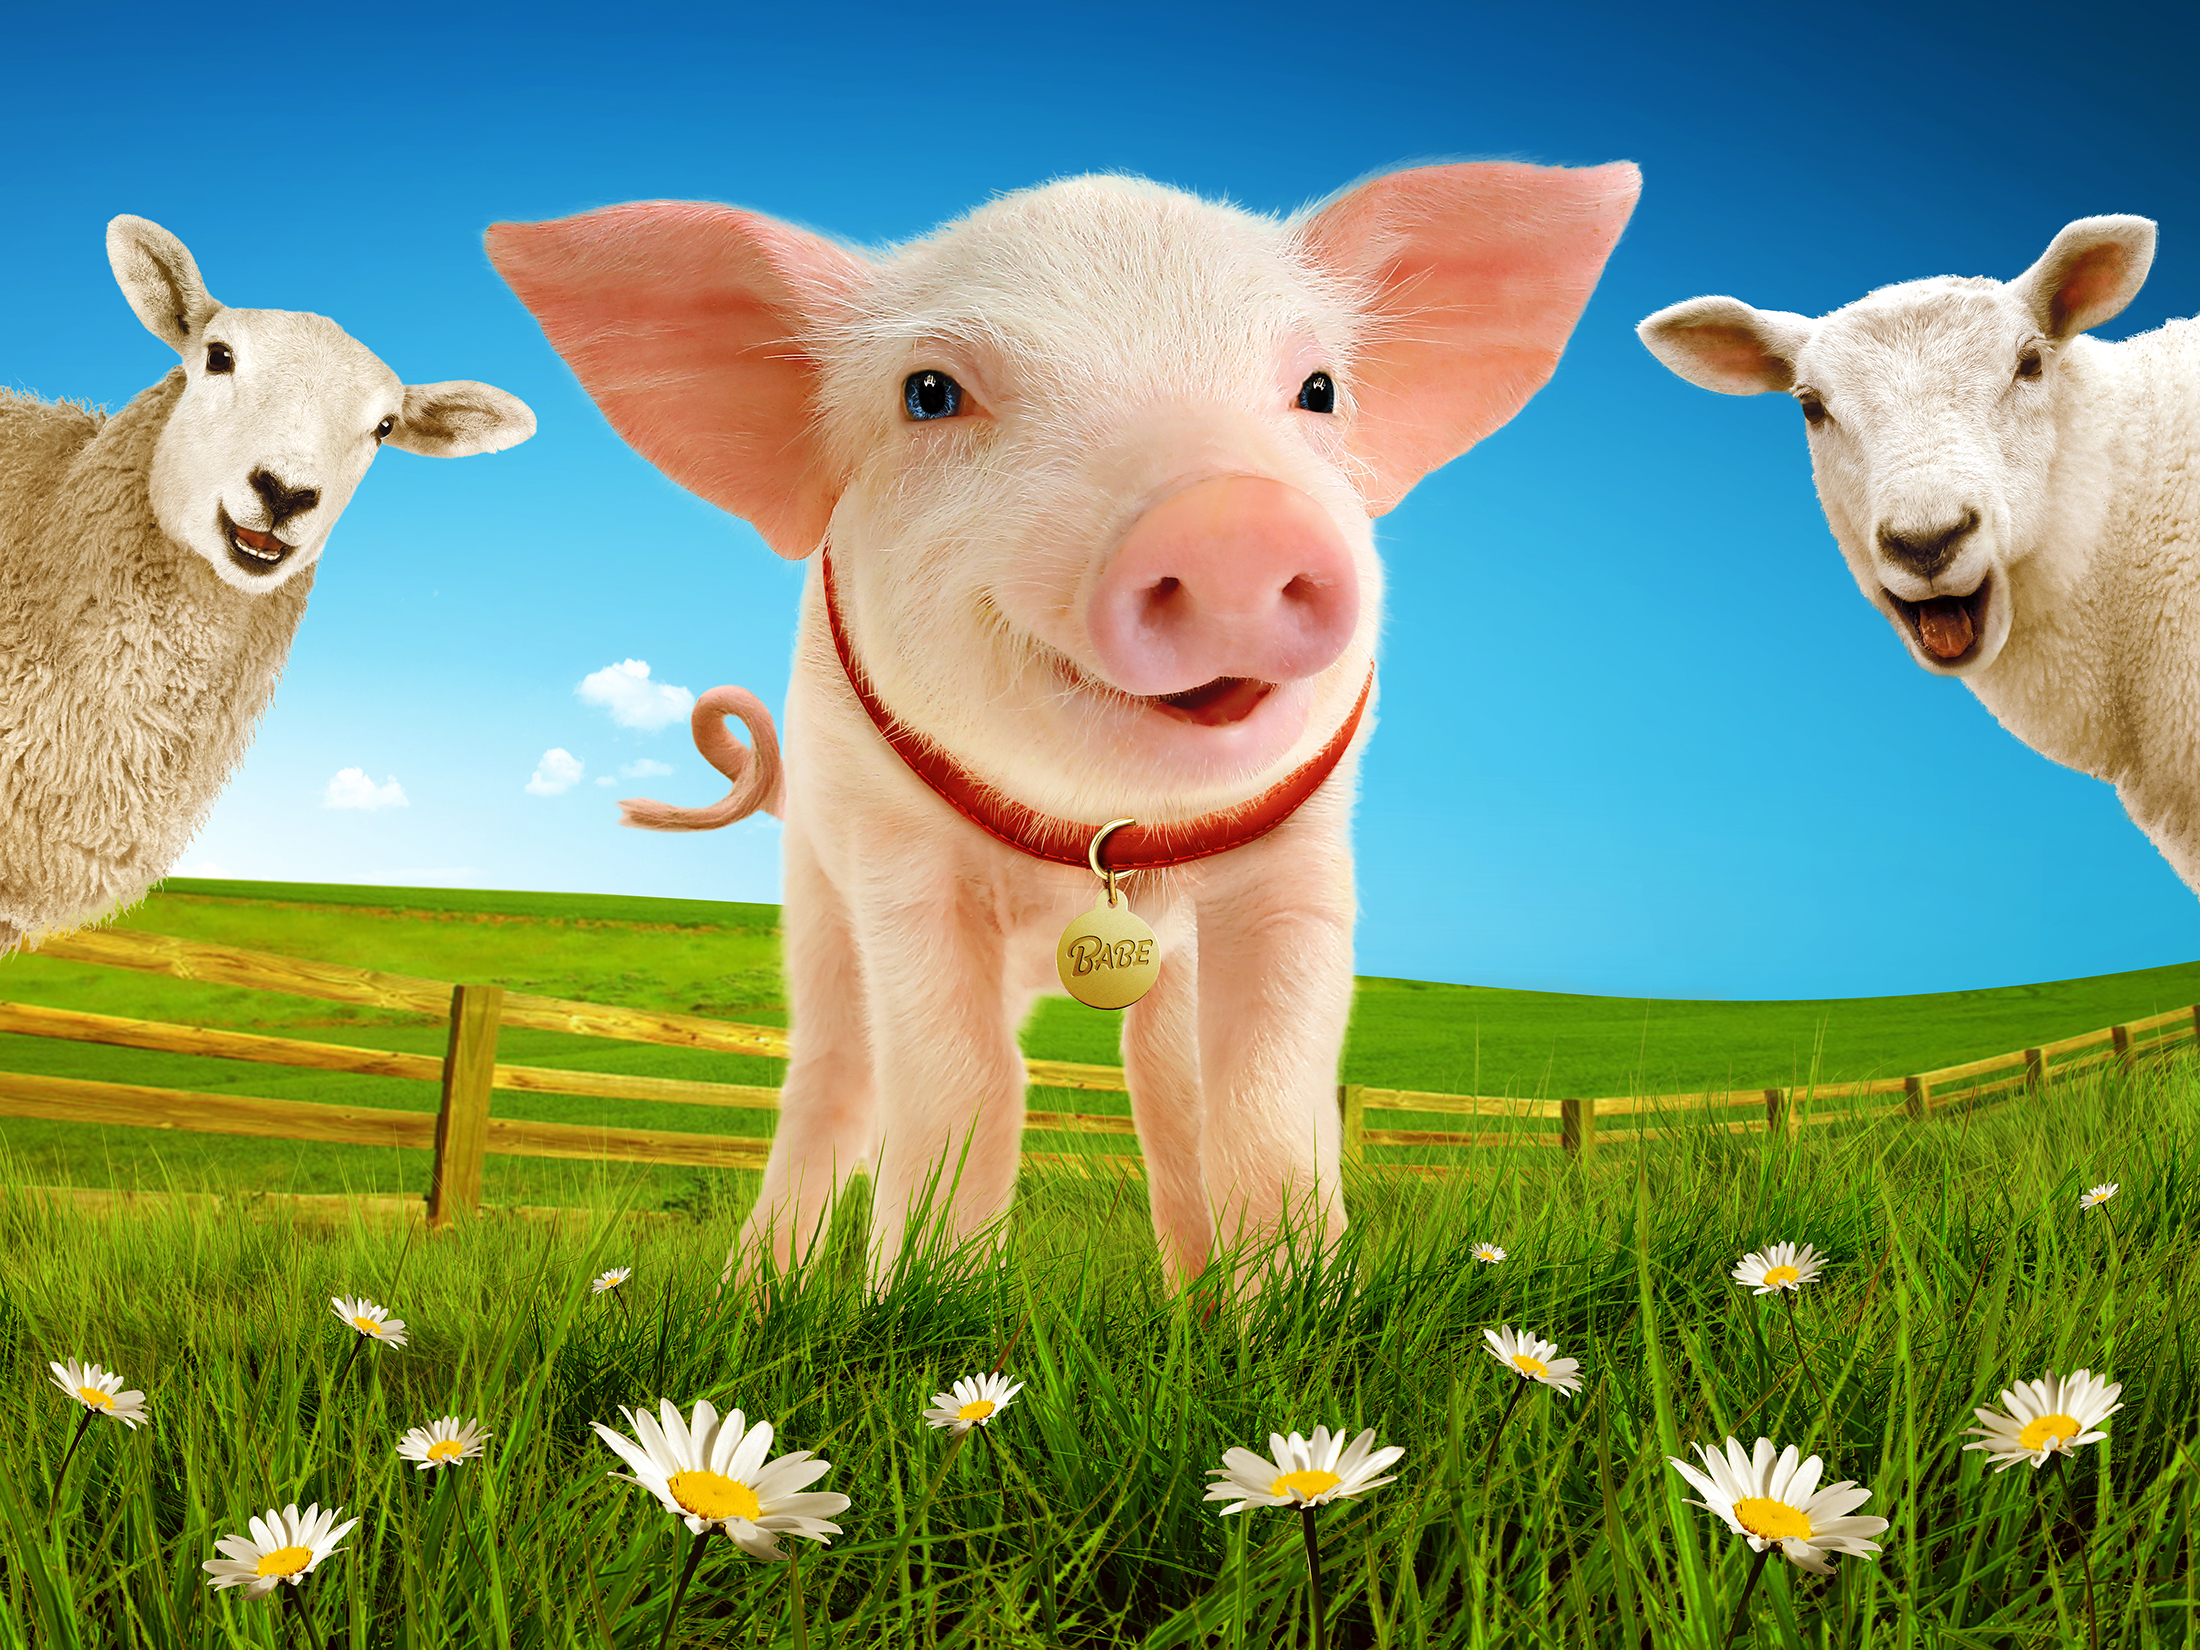 babe-the-sheep-pig-landscape-image